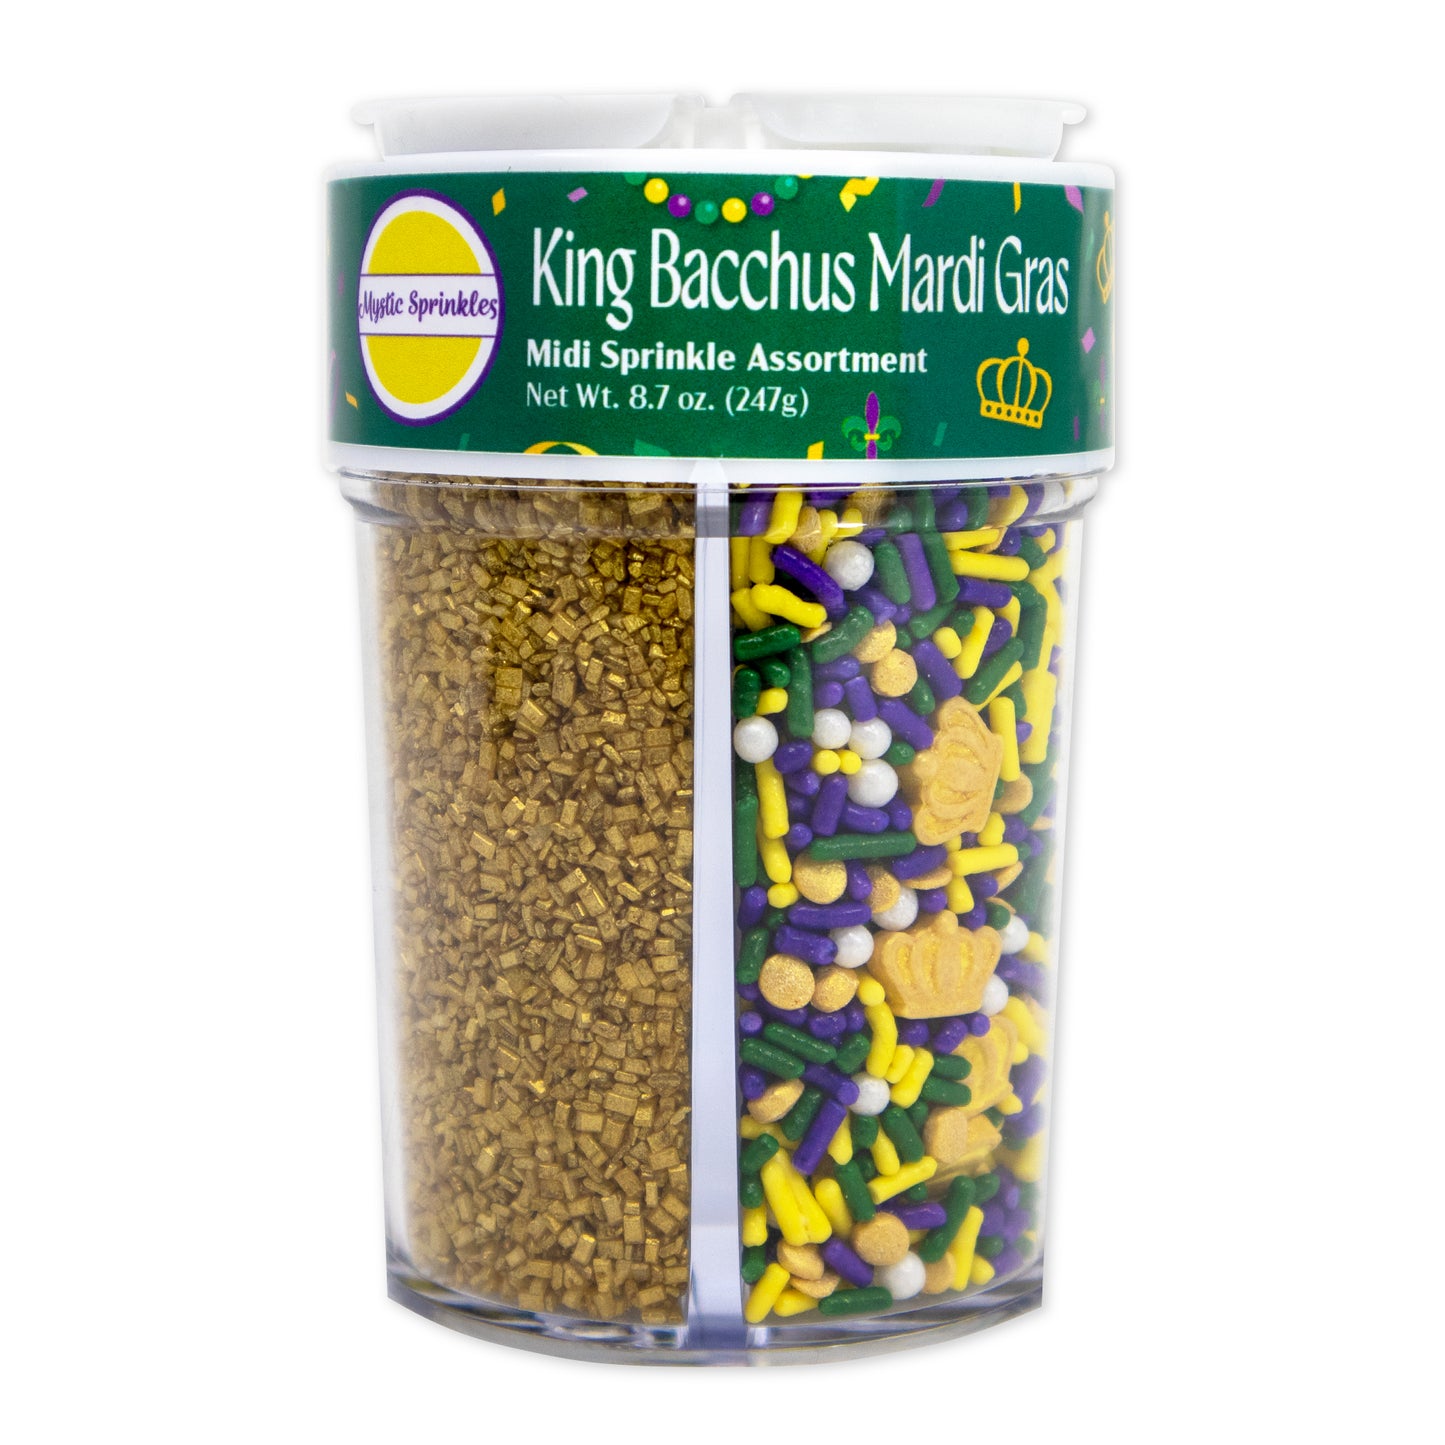 King Bacchus Mardi Gras Midi Sprinkle Assortment 6.1oz